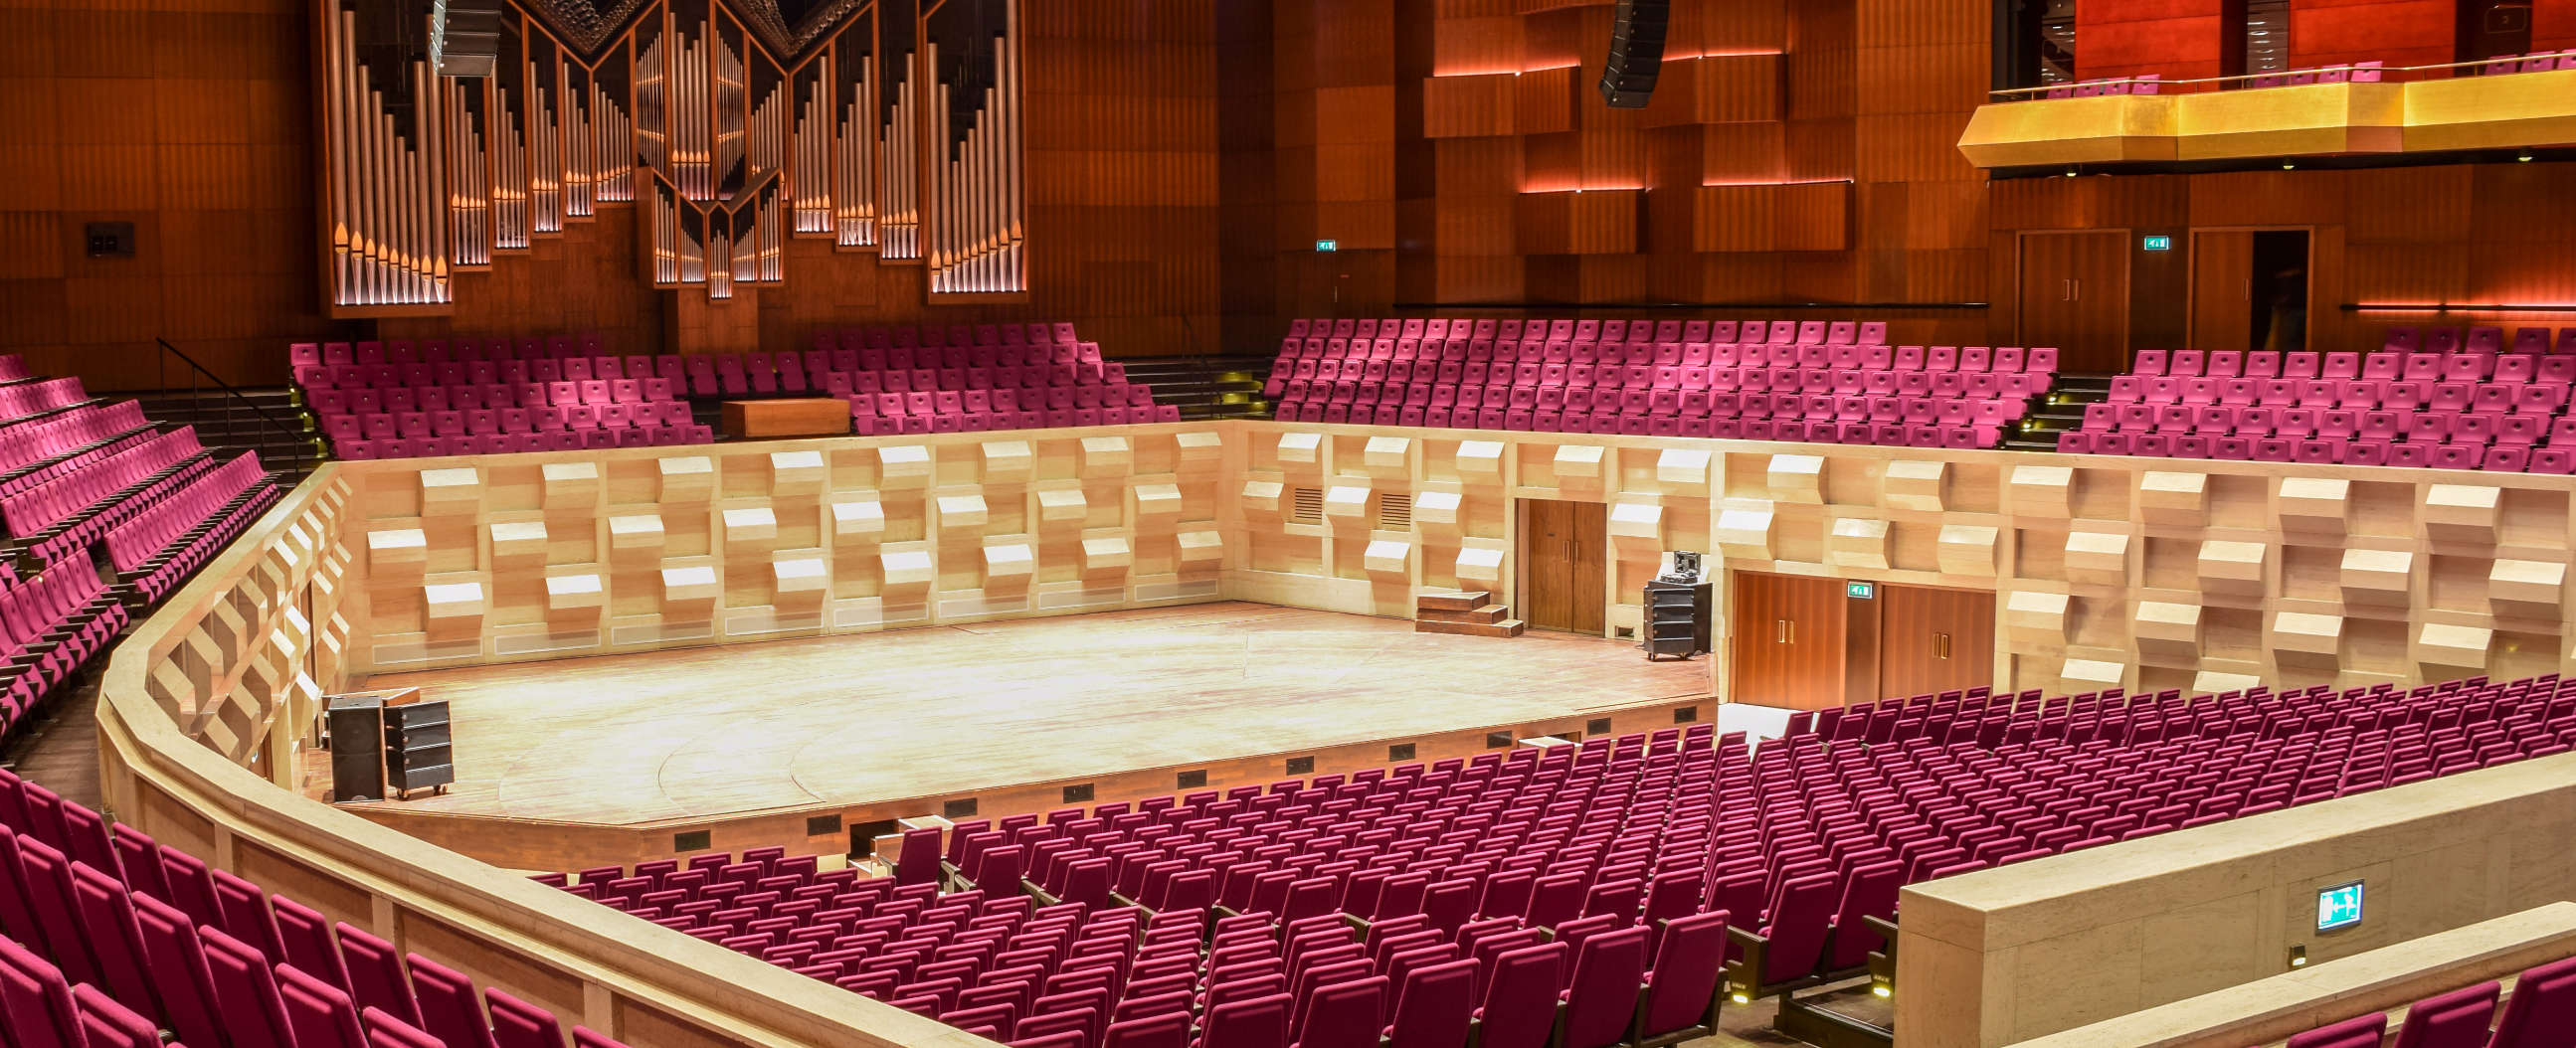 De Doelen, concert hall, Rotterdam The Netherlands